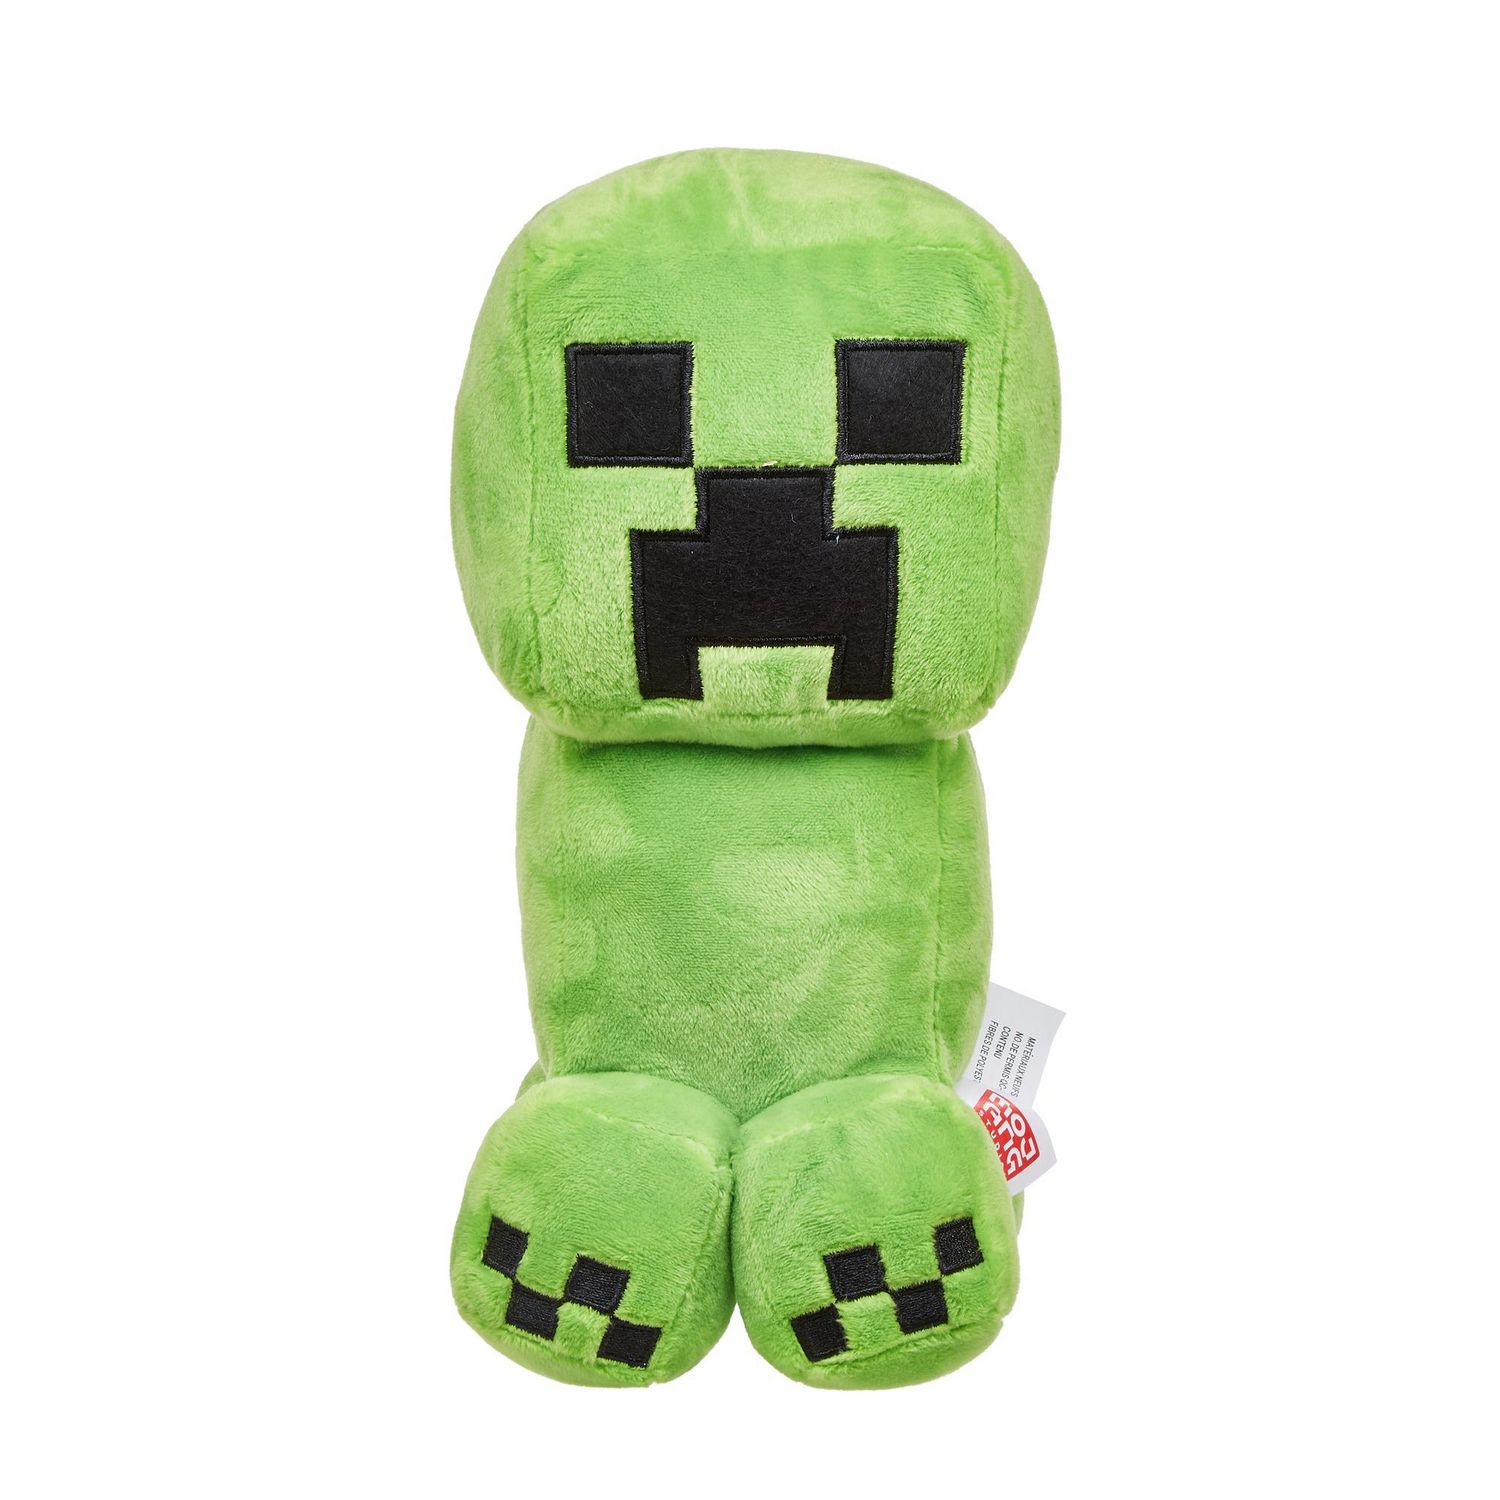 Minecraft Plush Creeper Doll 8-in Plush Dolls, Fan Favorite